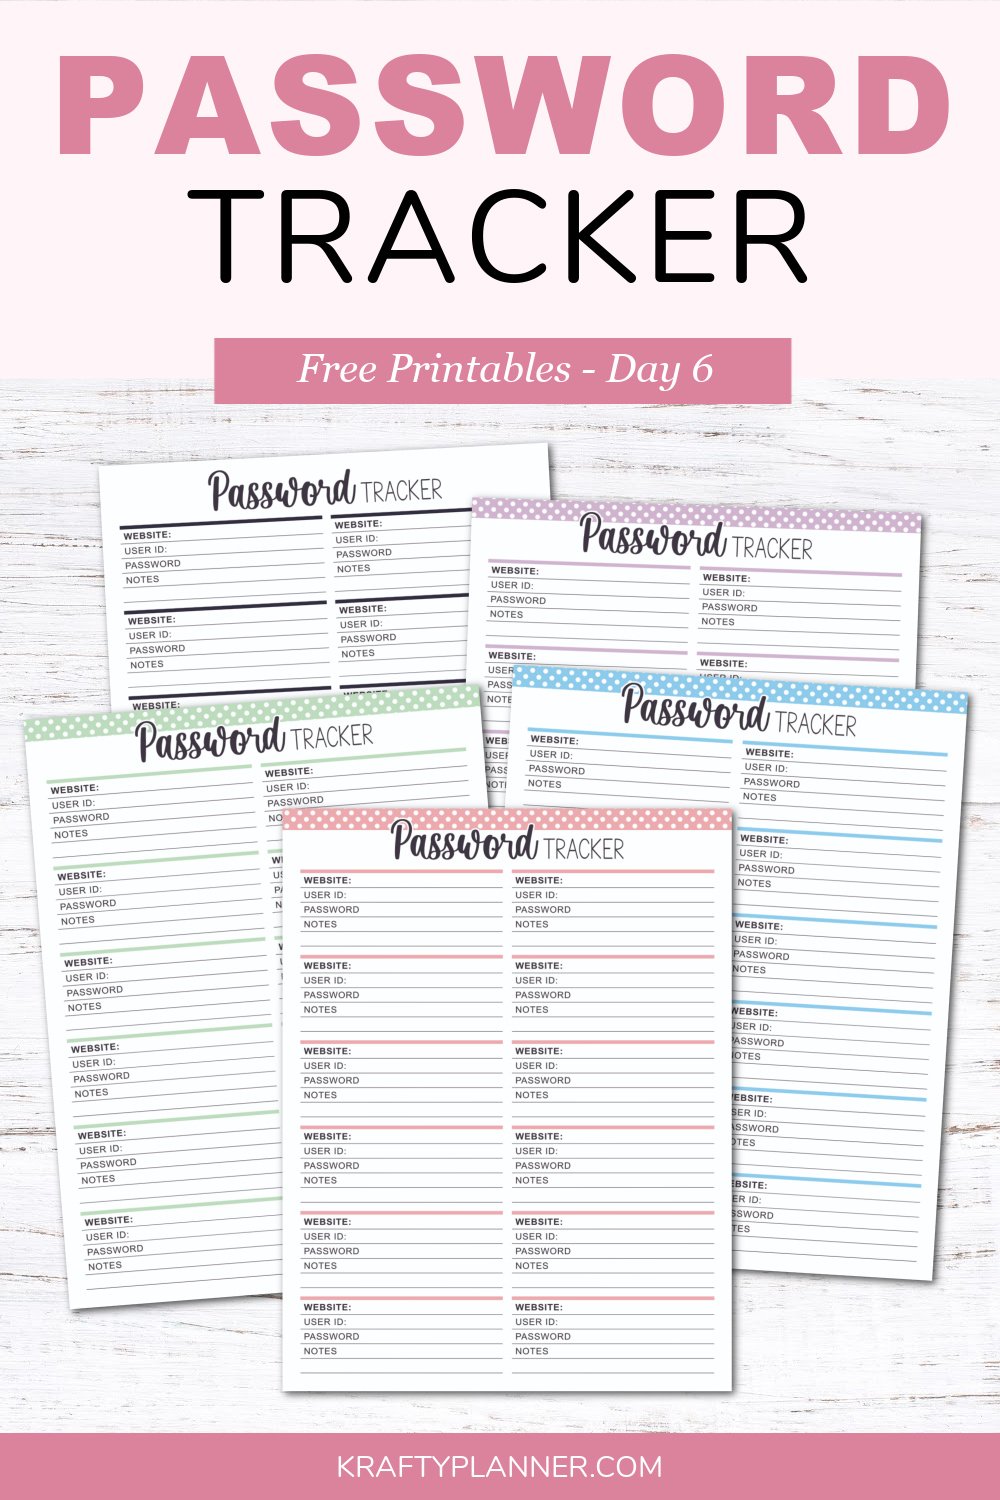 Password Tracker - Free Printable - Day 6